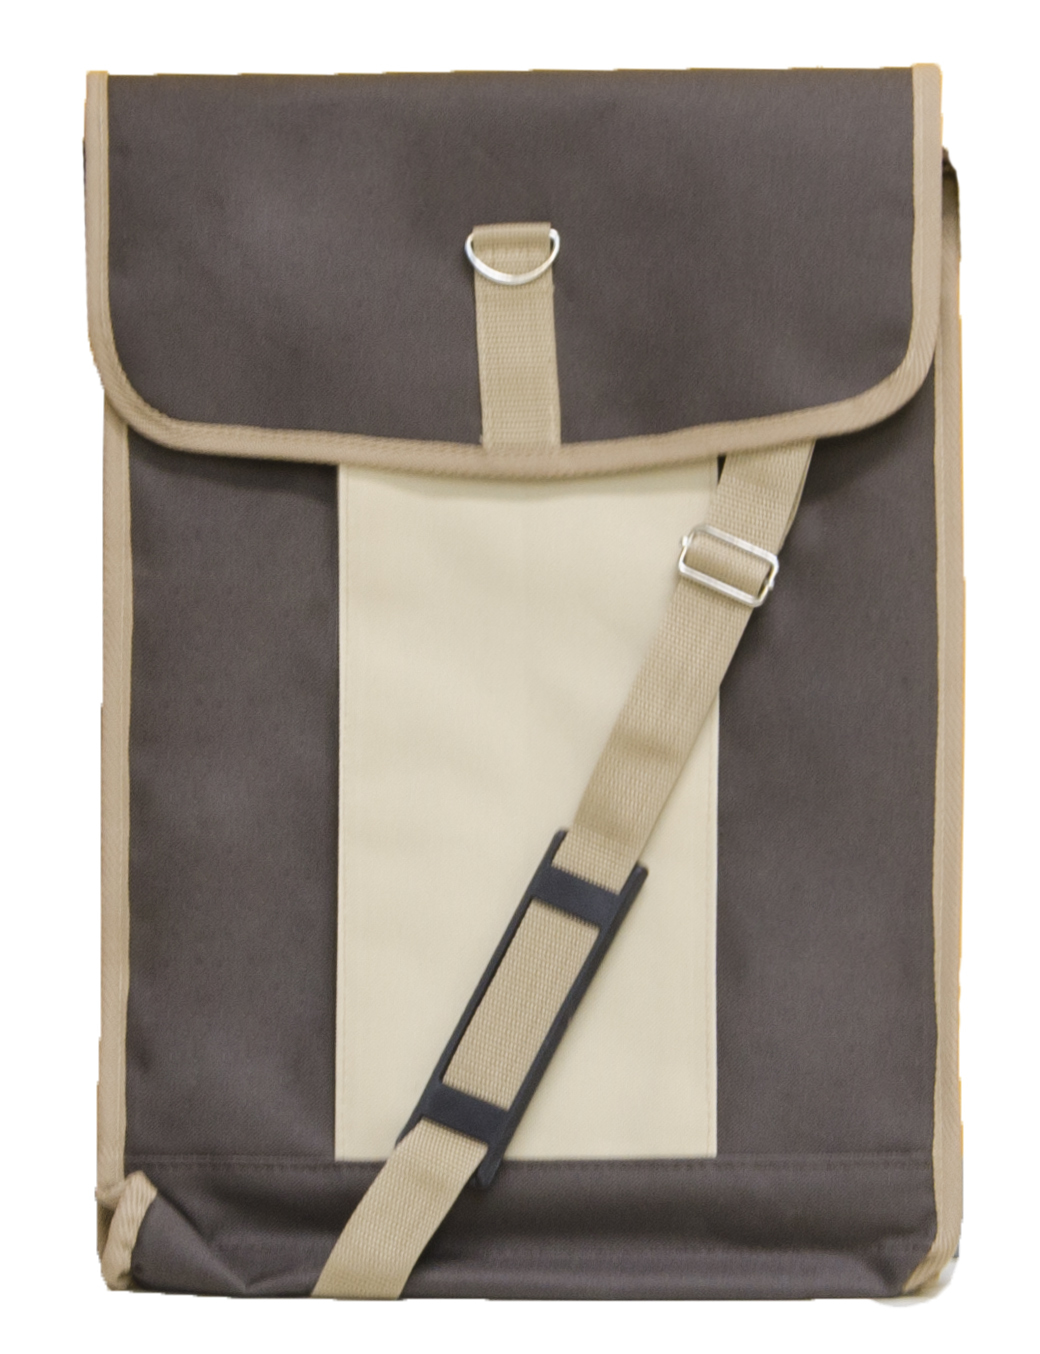 Сумка для планшета 42х30 (жест.) коричневая с бежевым карманом сумка для планшета 42х30 жест бежевая с коричневым карманом